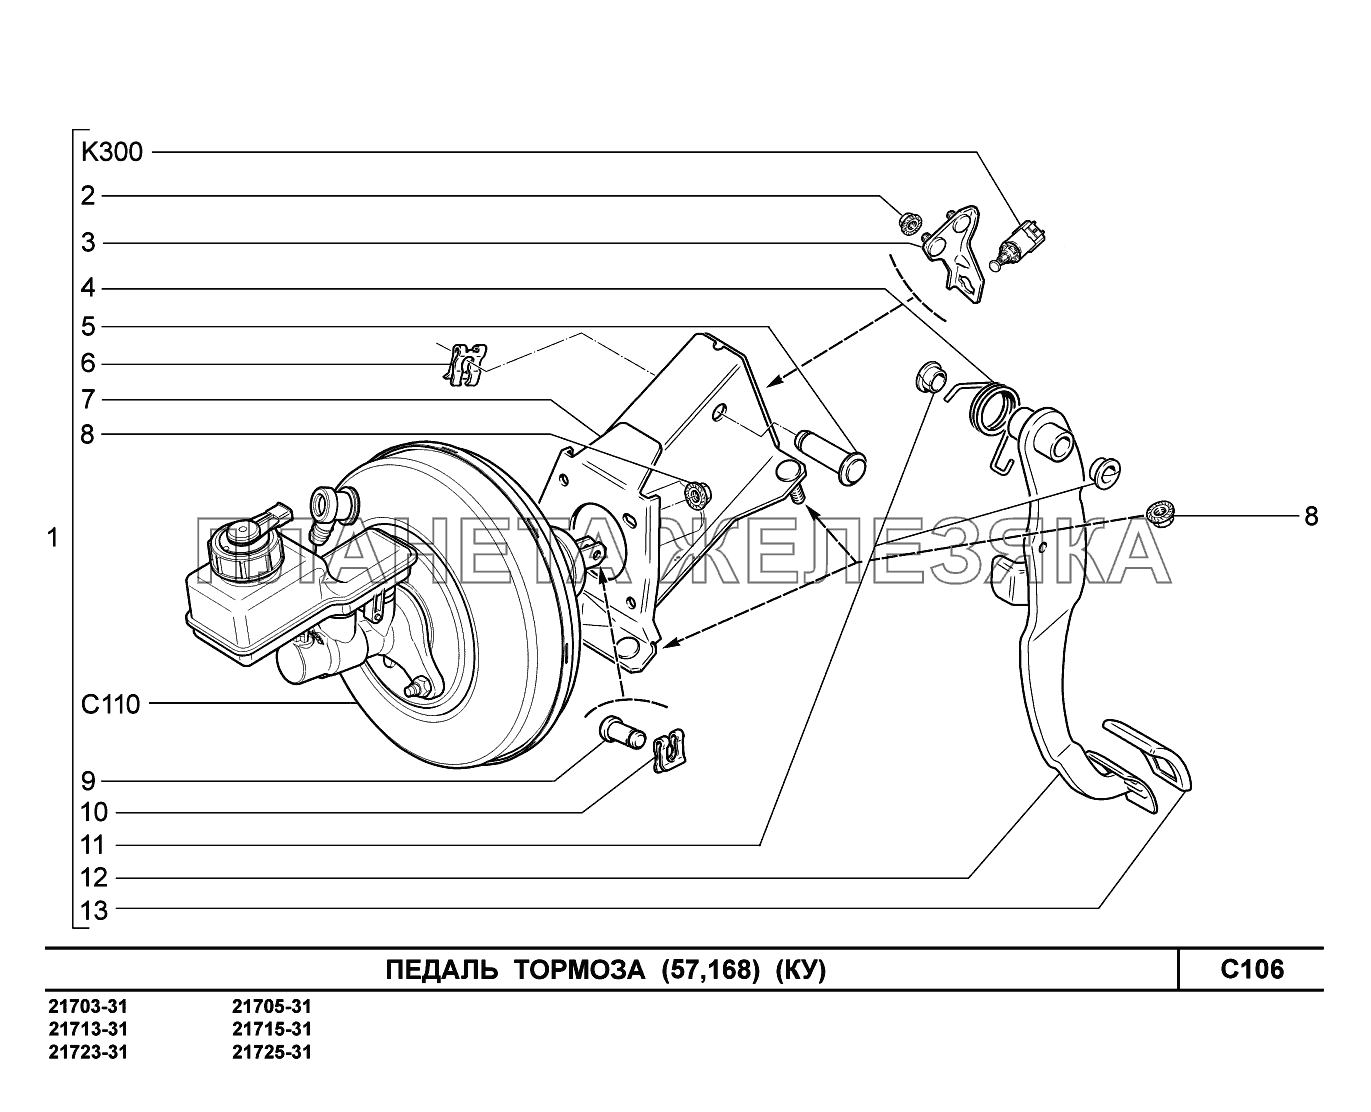 C106. Педаль тормоза ВАЗ-2170 